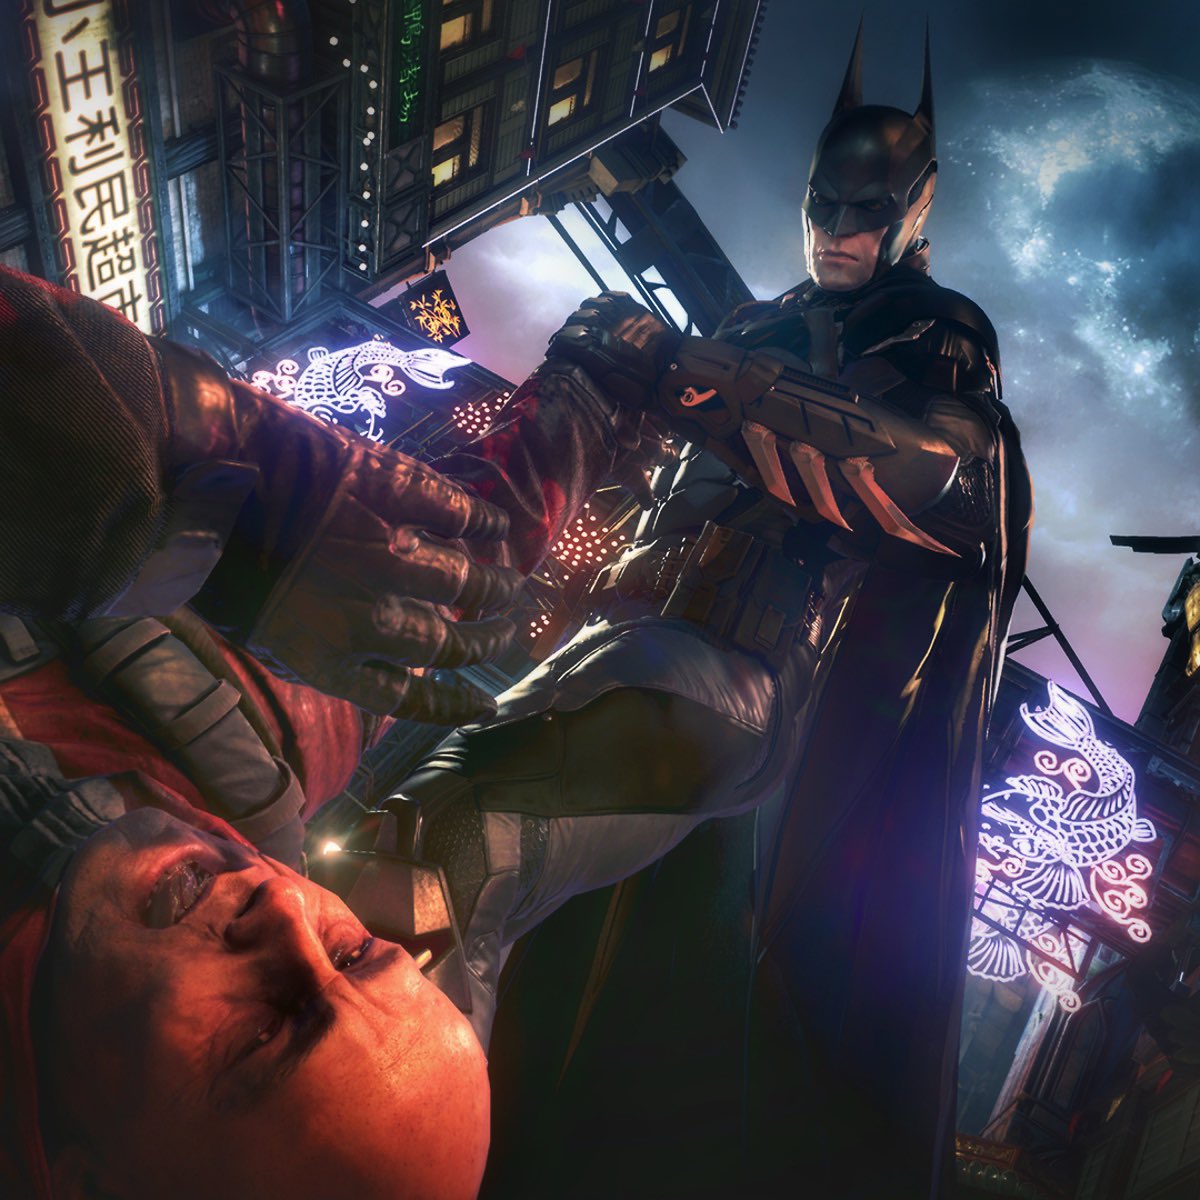 #Batman #BatmanArkhamKnight #PlayStation #PhotoMode #ArtisticofSociety #VGPNetwork